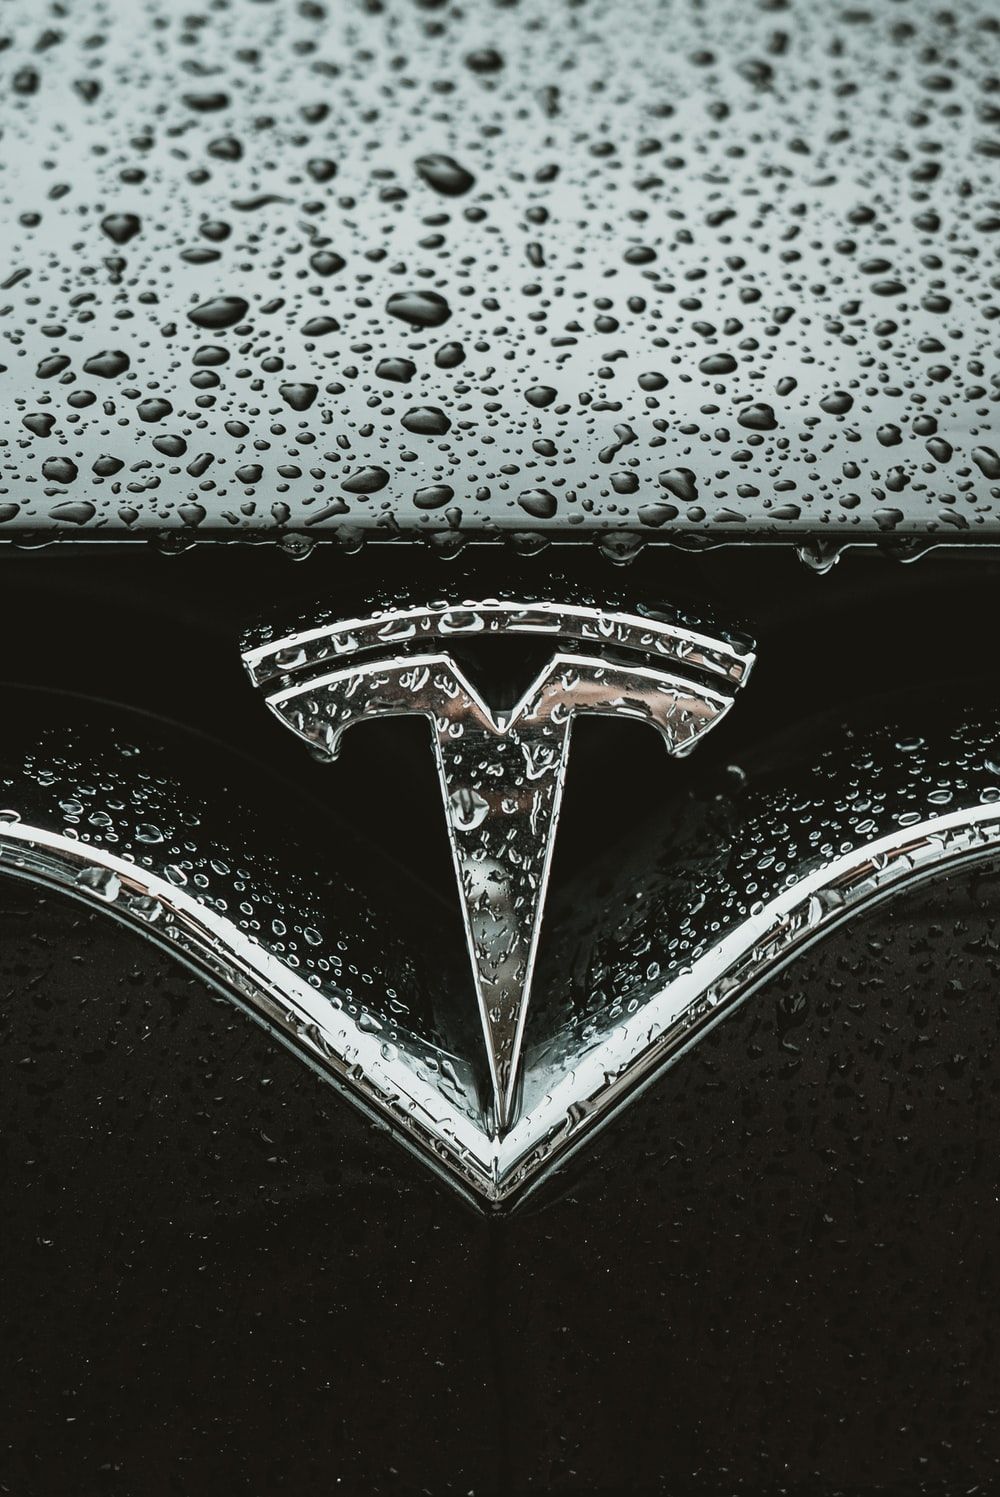 Tesla Picture [HD]. Download Free Image